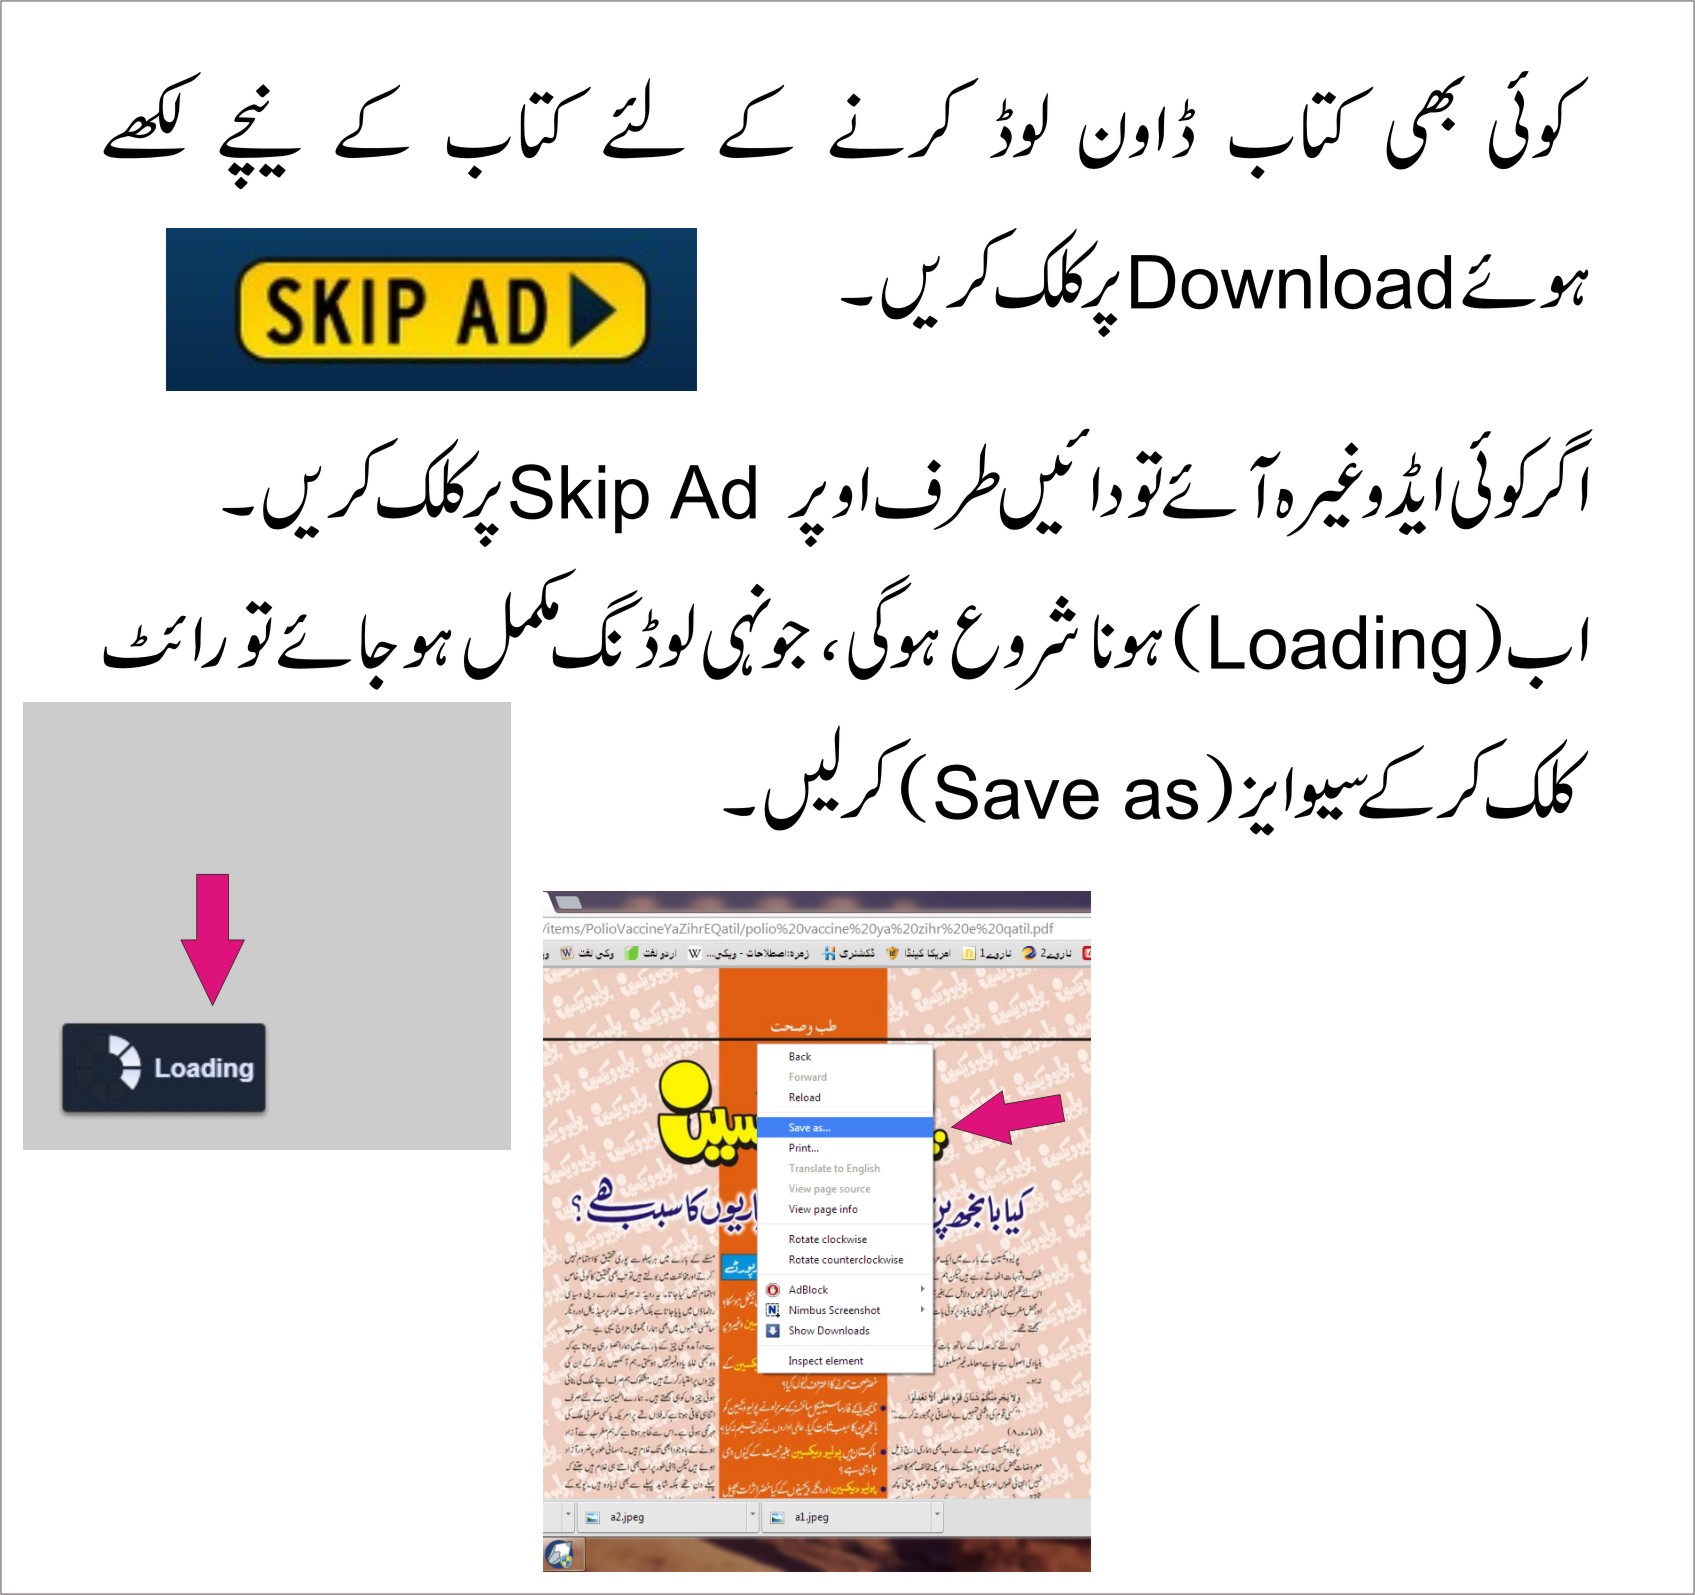 Free Urdu Books Arabic Learning Pdf